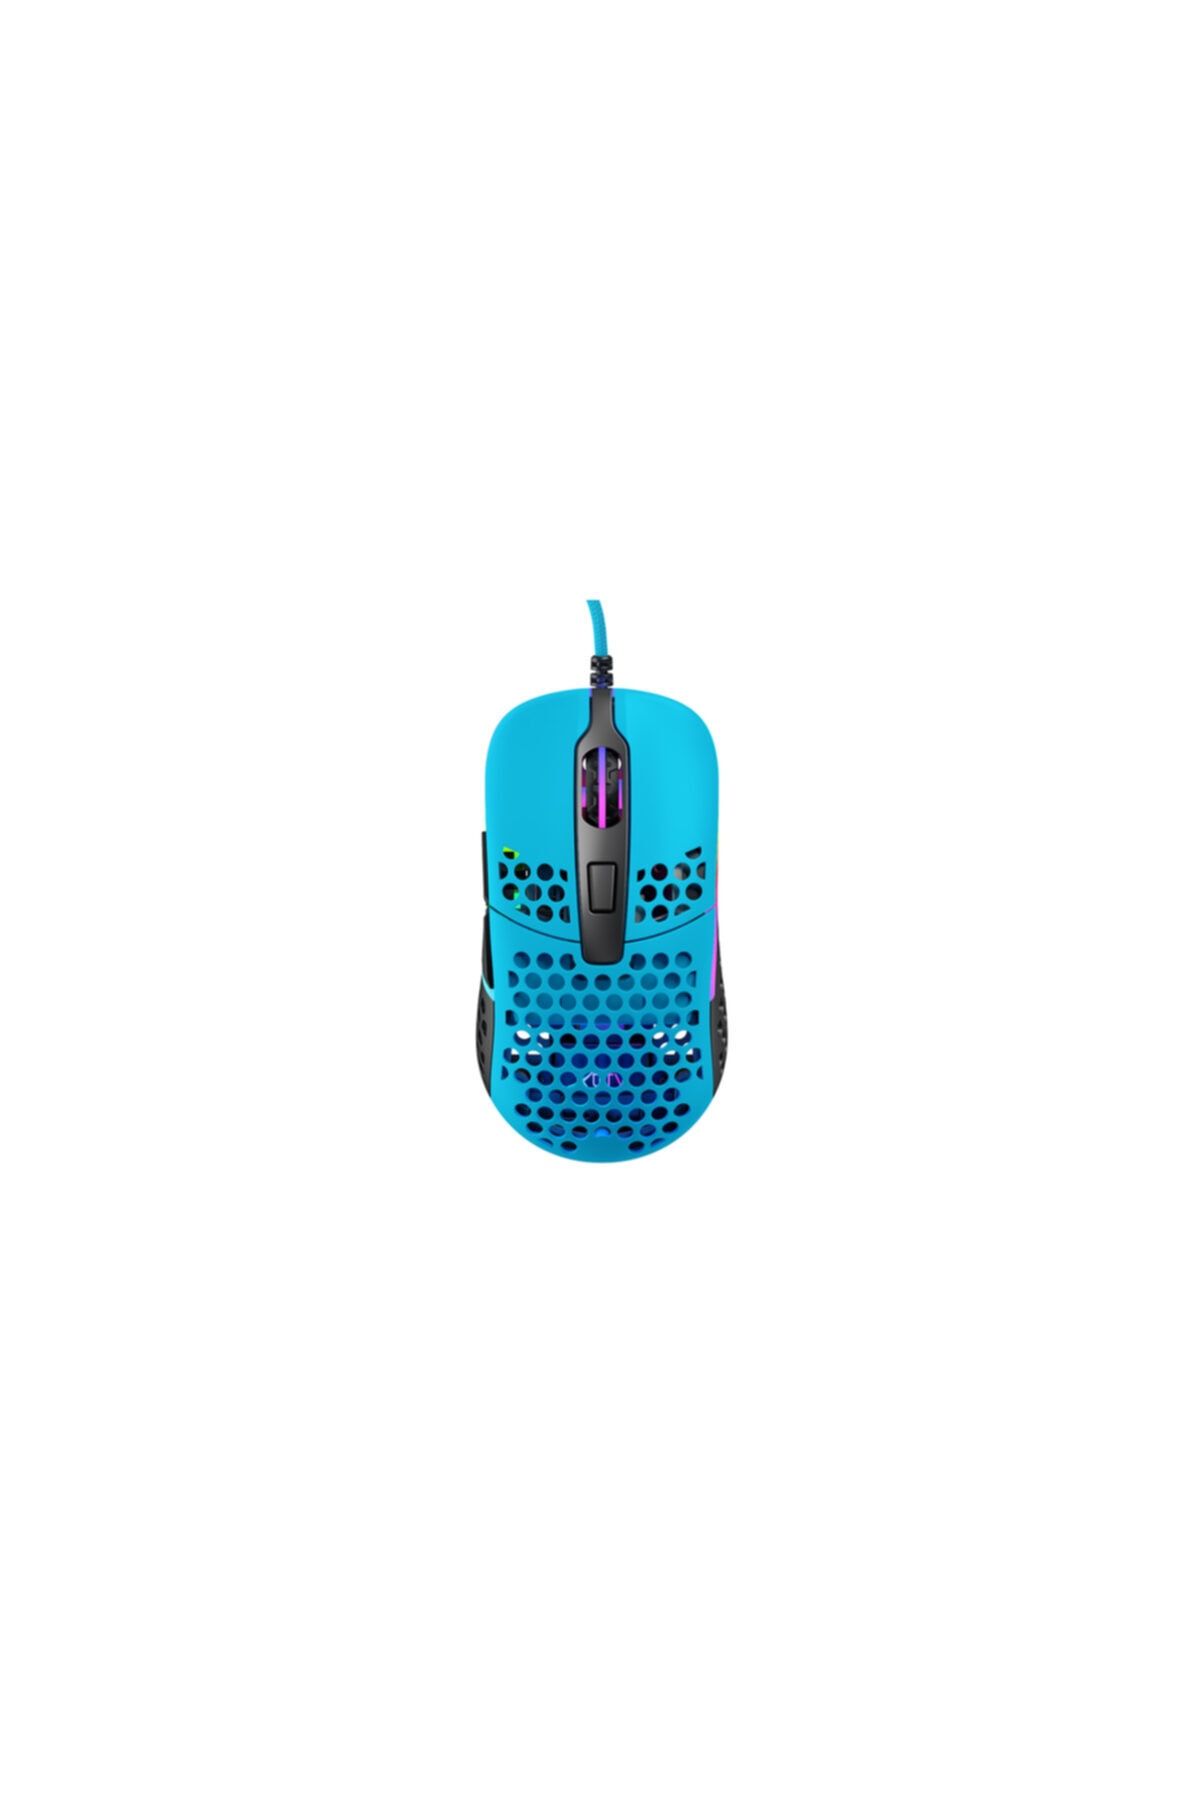 Xtrfy M42 Rgb Ultra-lıght Oyuncu Mouse Miami Blue